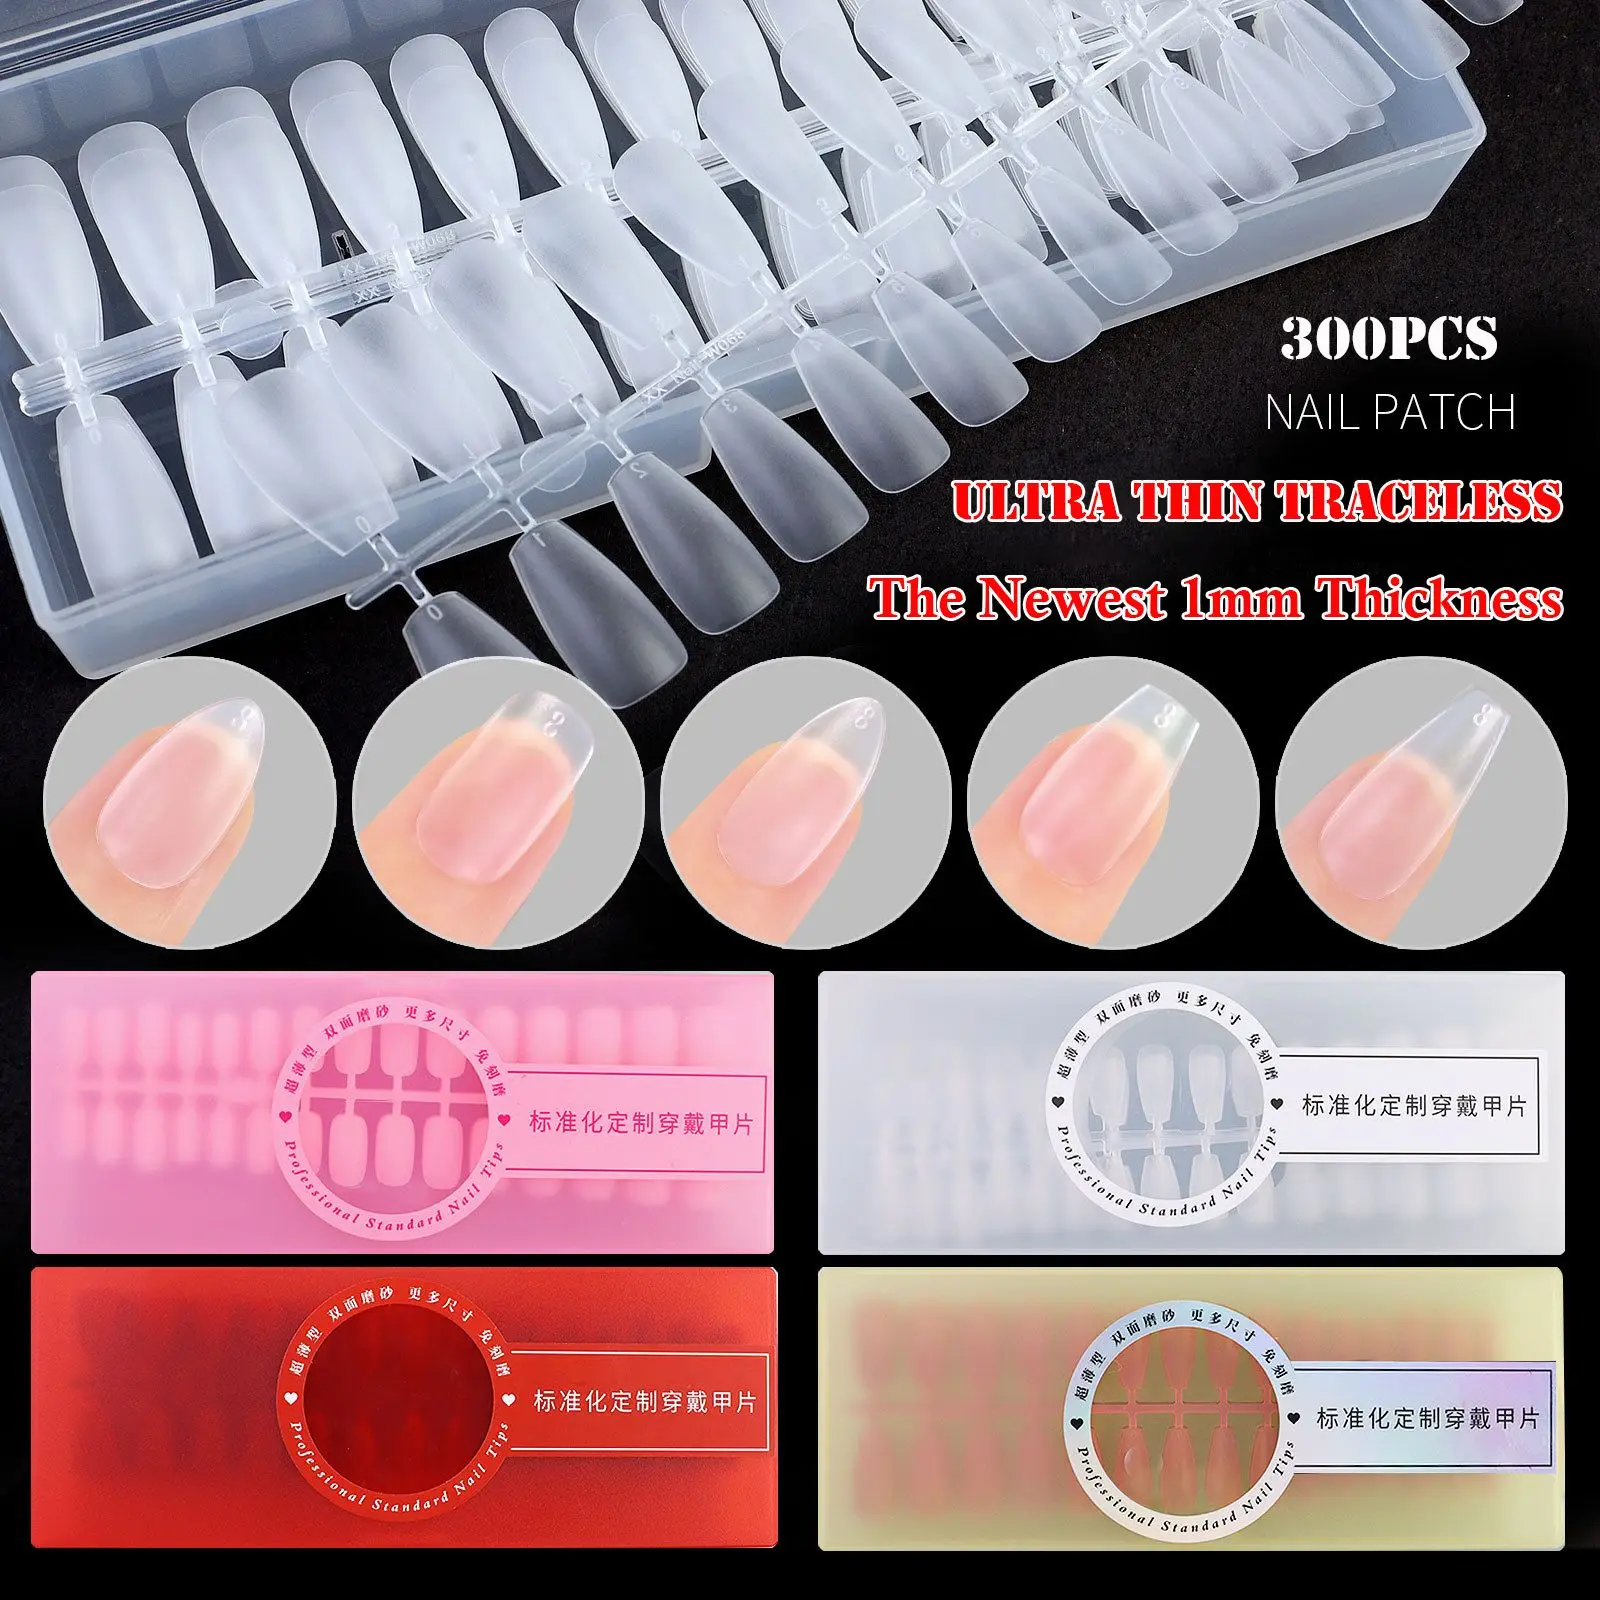 

300pcs Clear Ultra Thin Traceless Soft Fake Nails Kit Full Scrub No Need Grinding False Nails Full Cover Press On Nail Extension